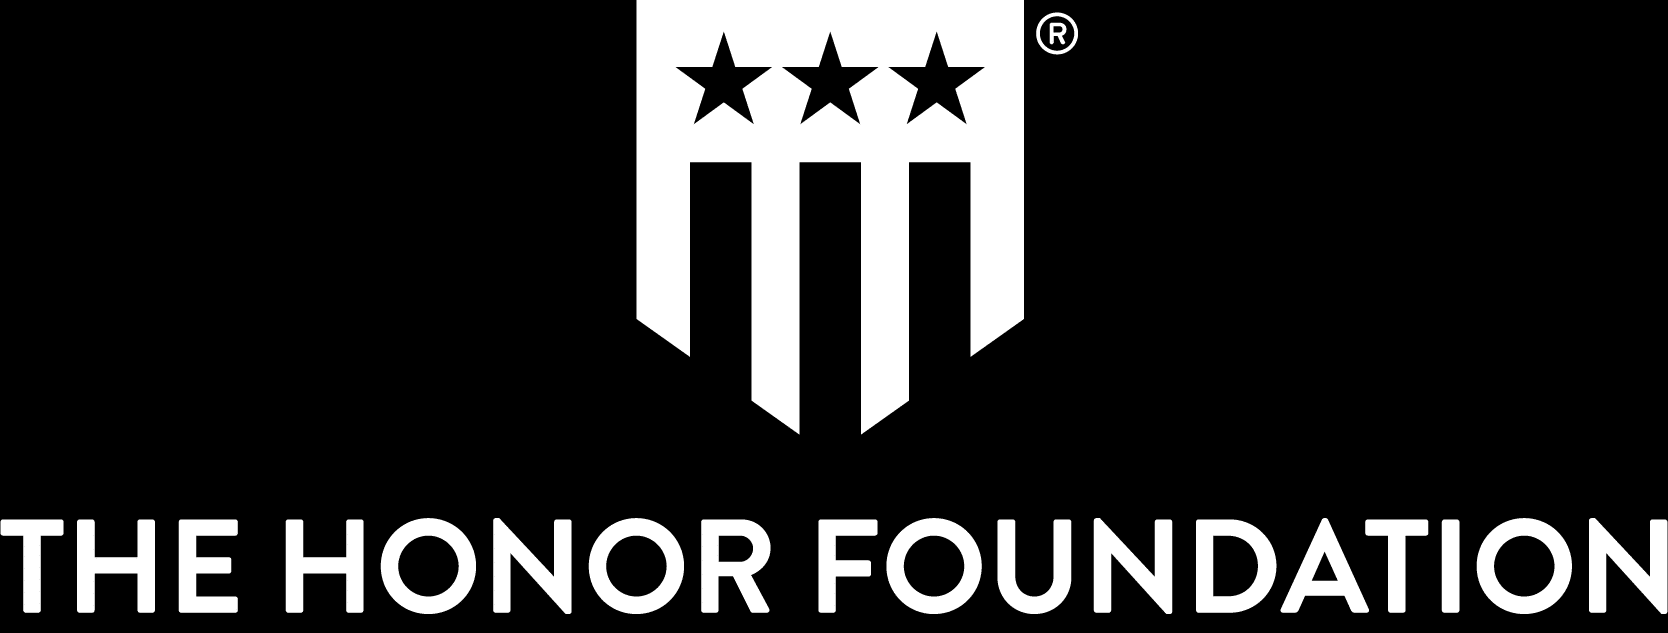 The Honor Foundation Logo